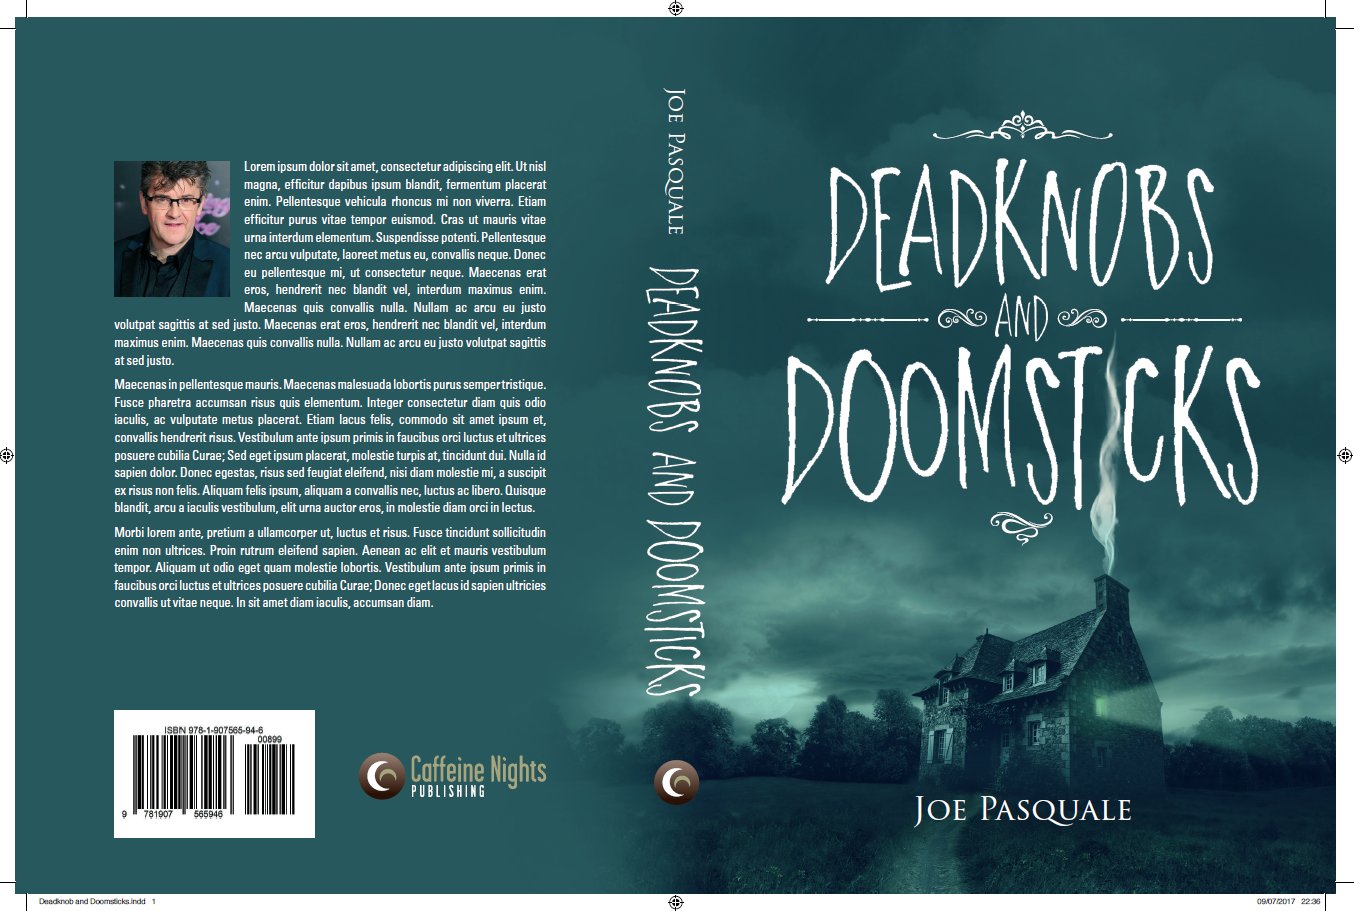 Deadknobs & Doomsticks by Joe Pasquale